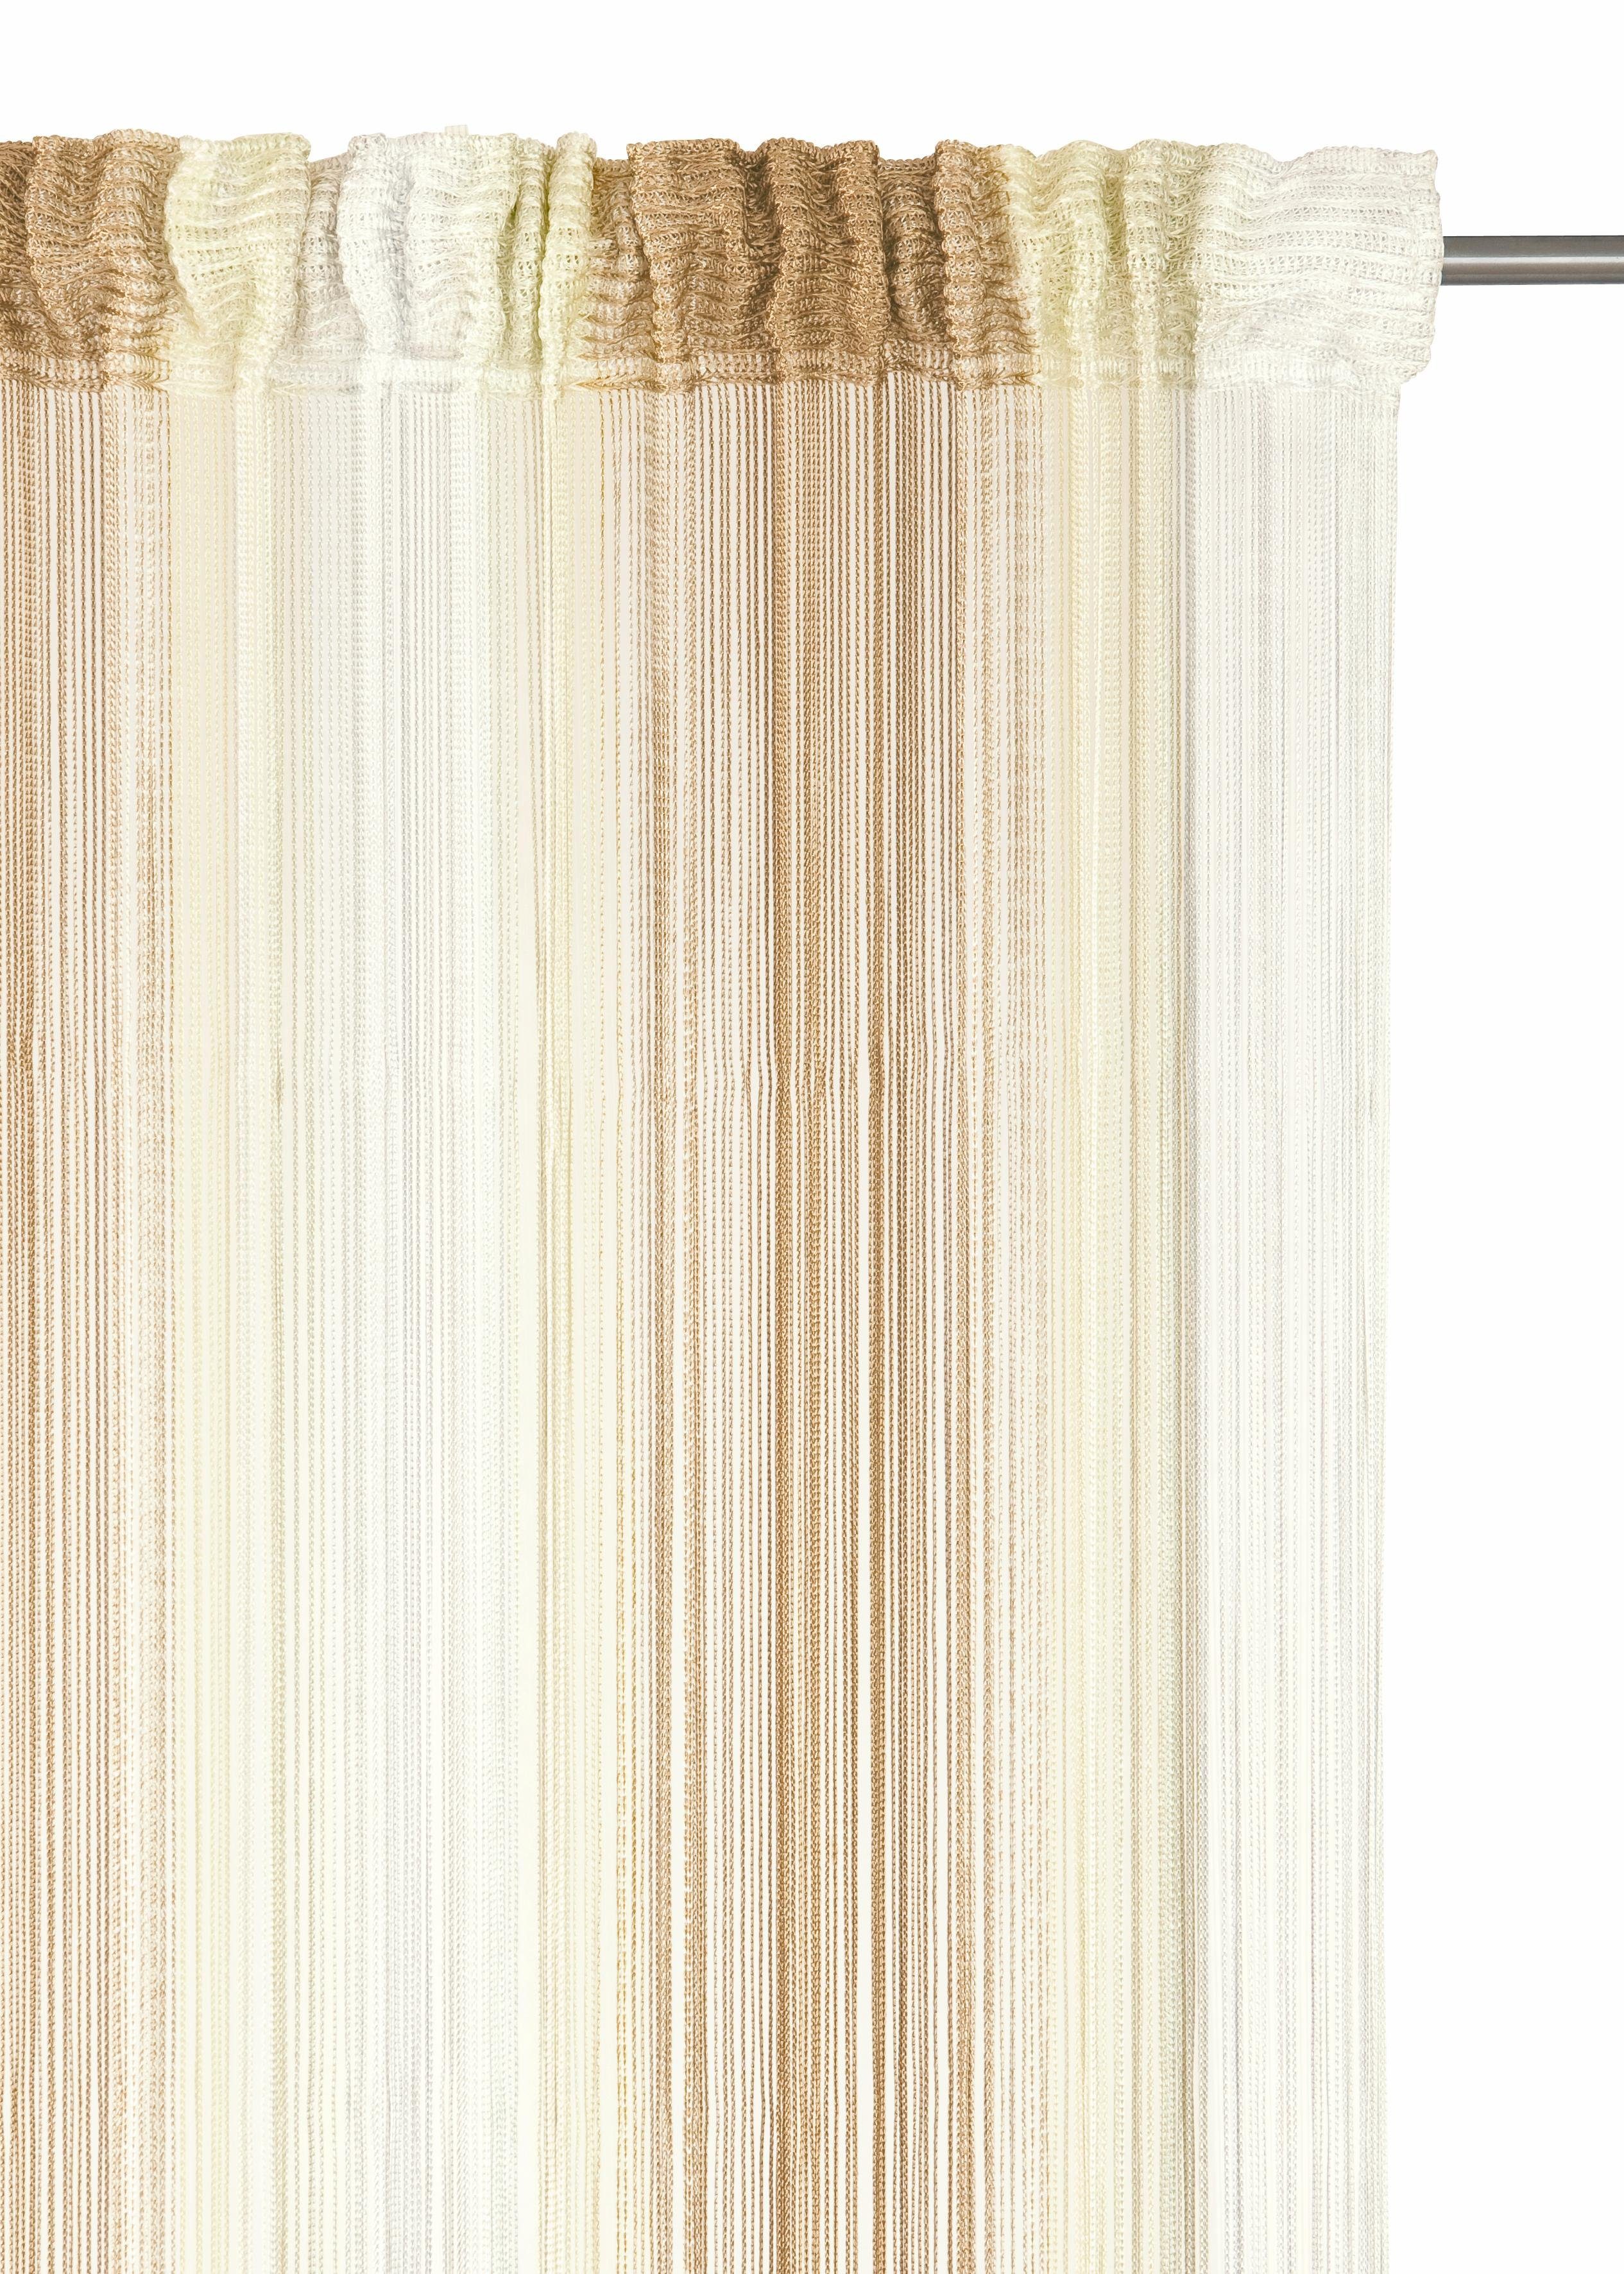 Fadenvorhang Insektenschutz, Rebecca, champagner/karamell halbtransparent, (1 Weckbrodt, St), kürzbar Gardine, Fadengardine, transparent, Multifunktionsband